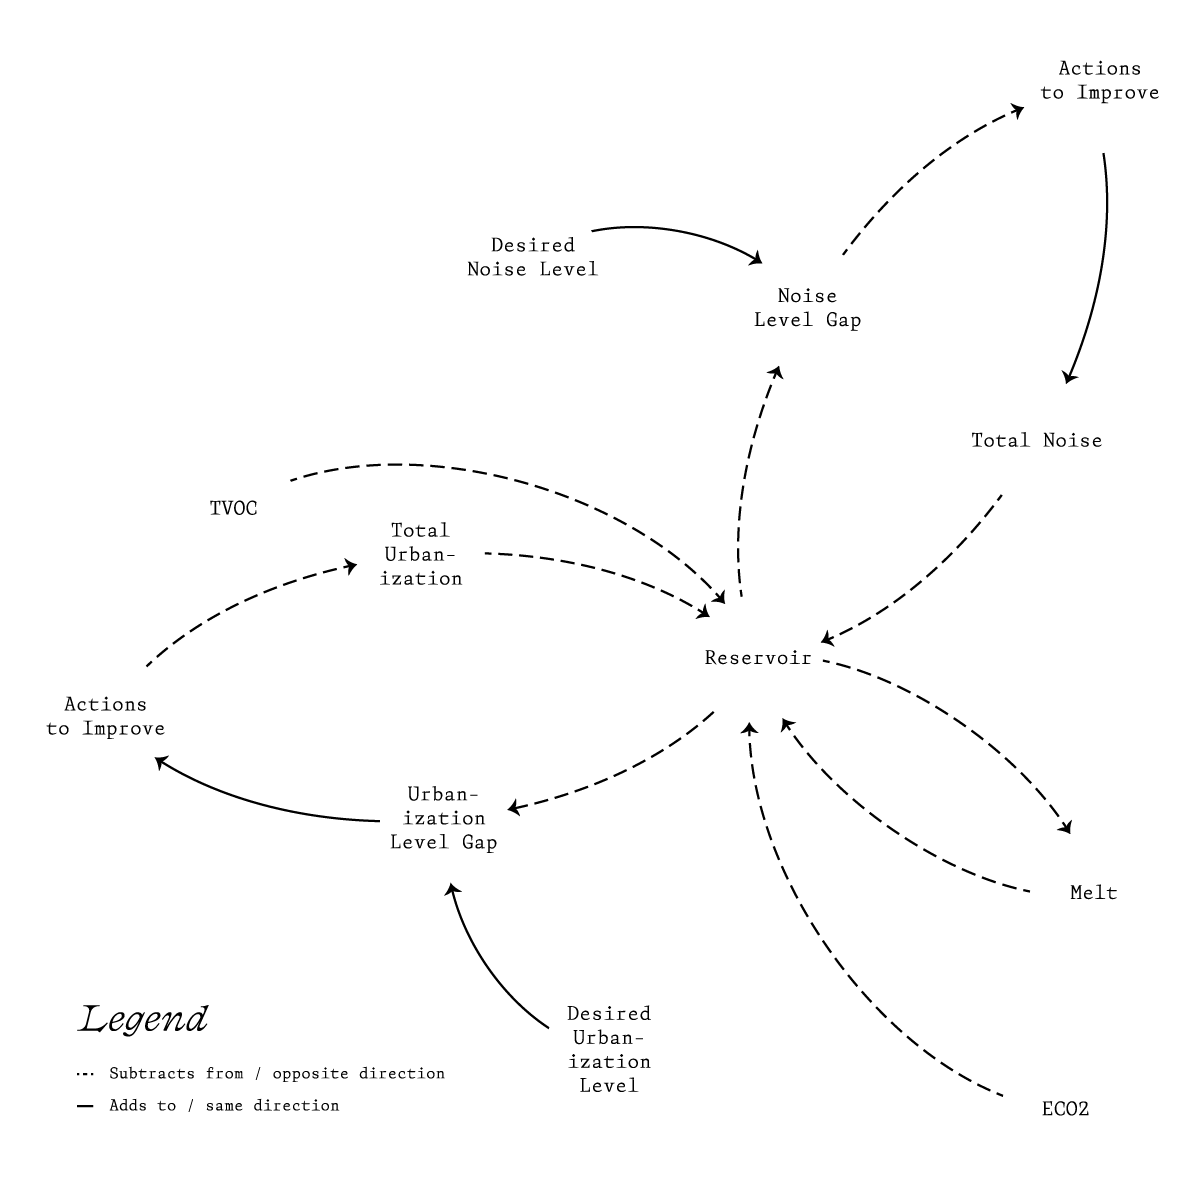 Causal loop diagram of the installation